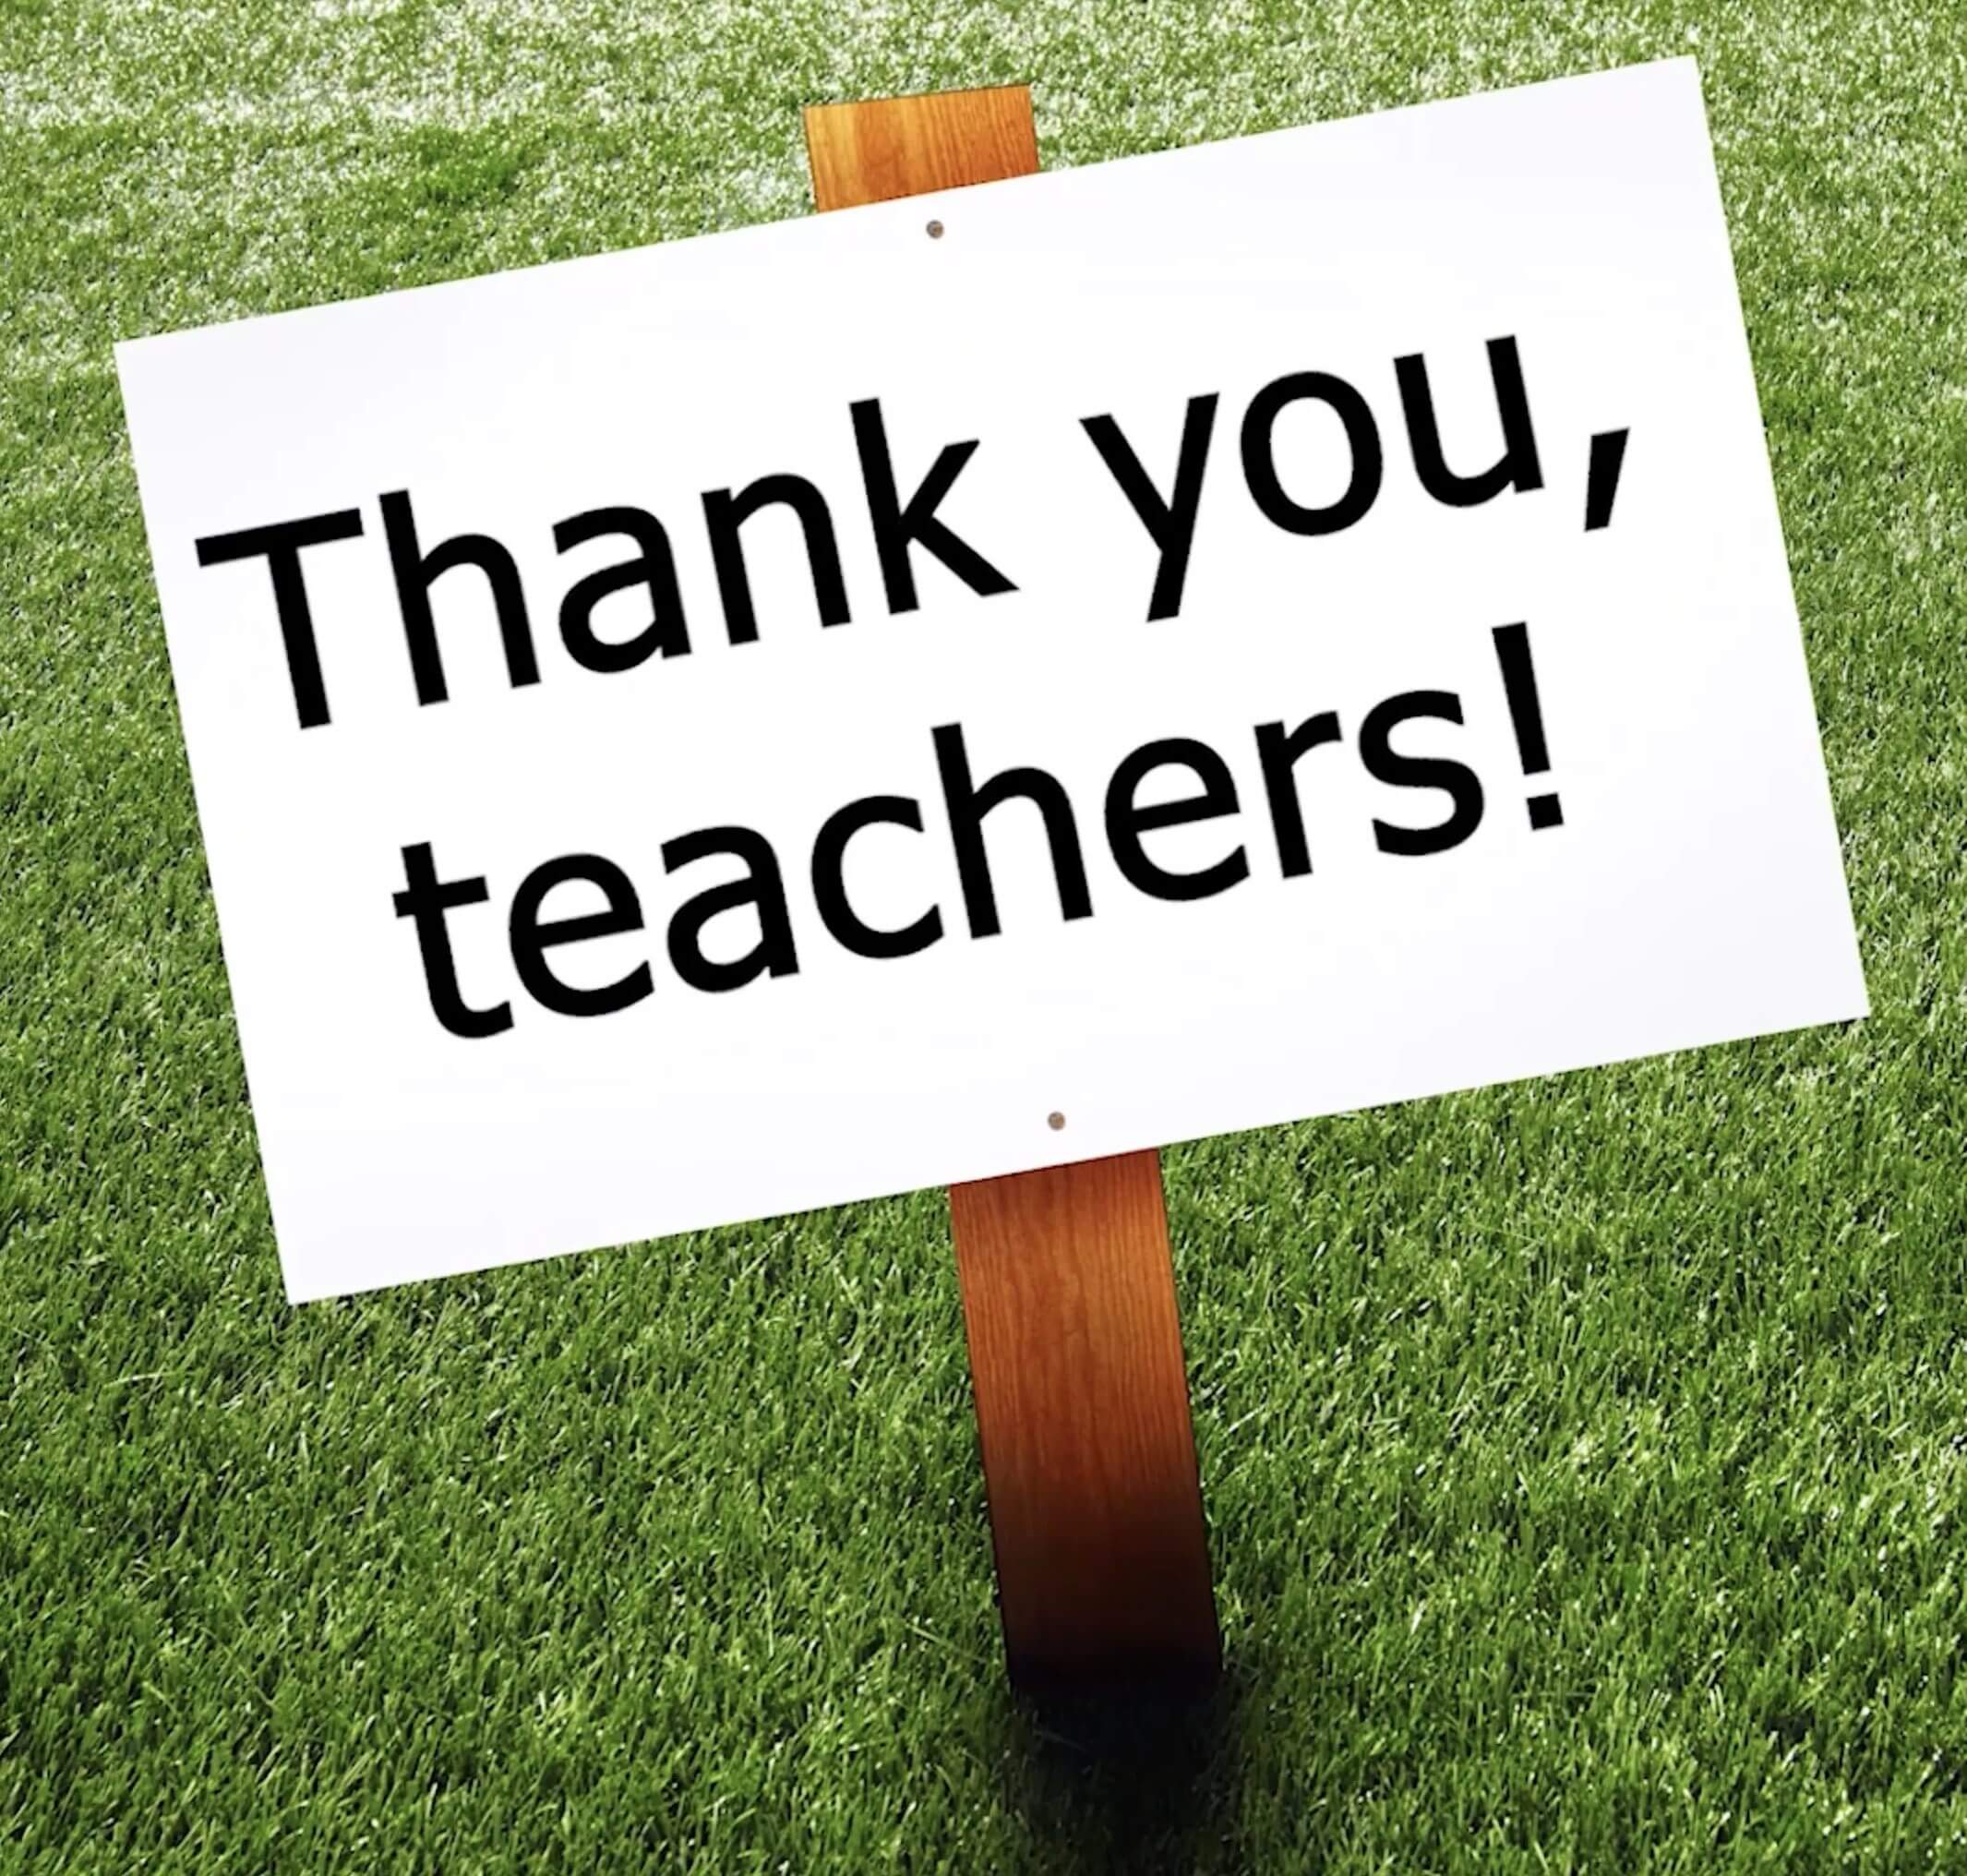 Thank you, teachers!